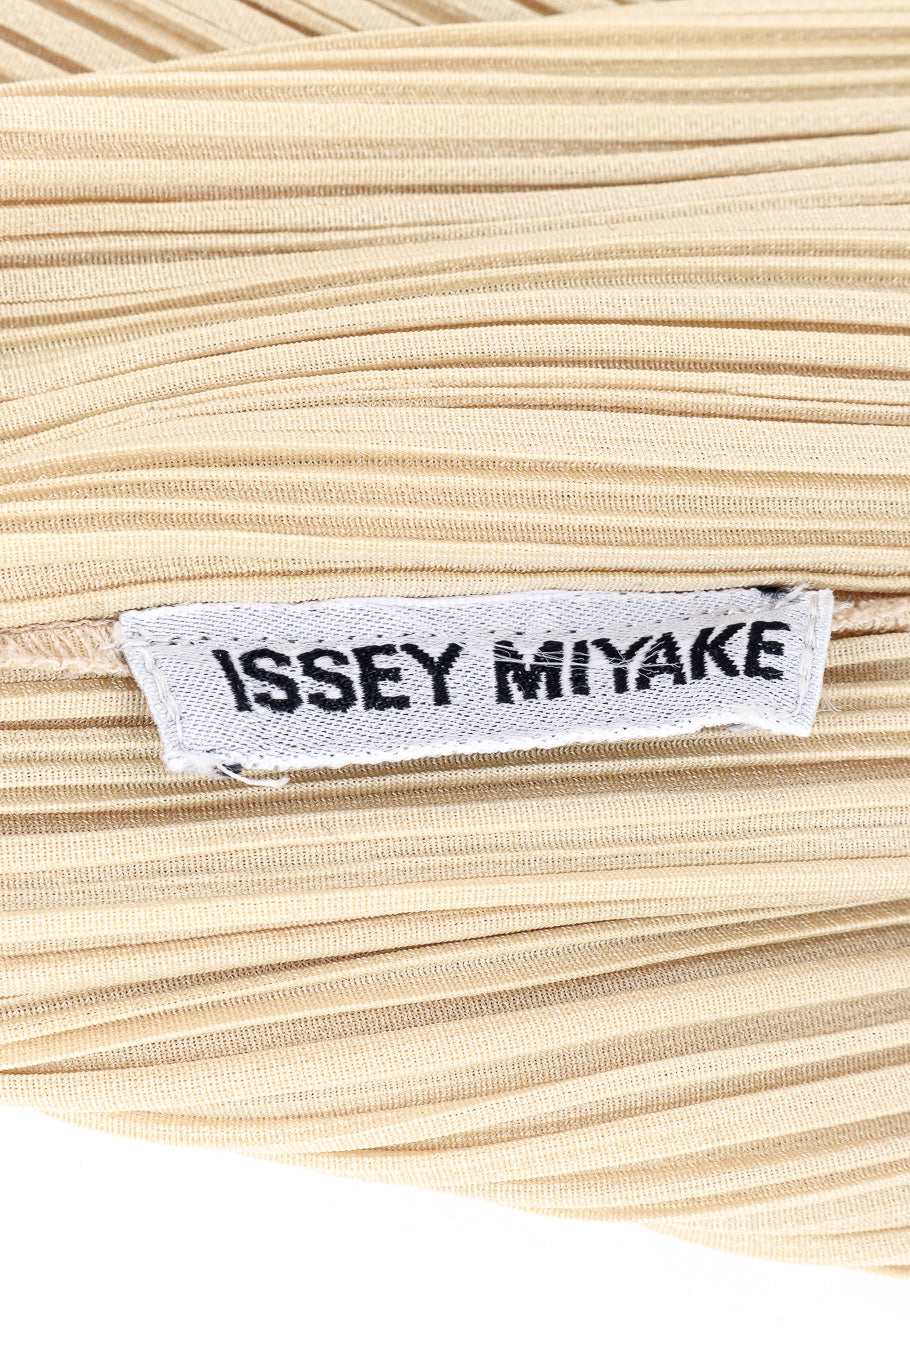 Pleats Please Issey Miyake Pleated Two Piece Set top label closeup @Recessla